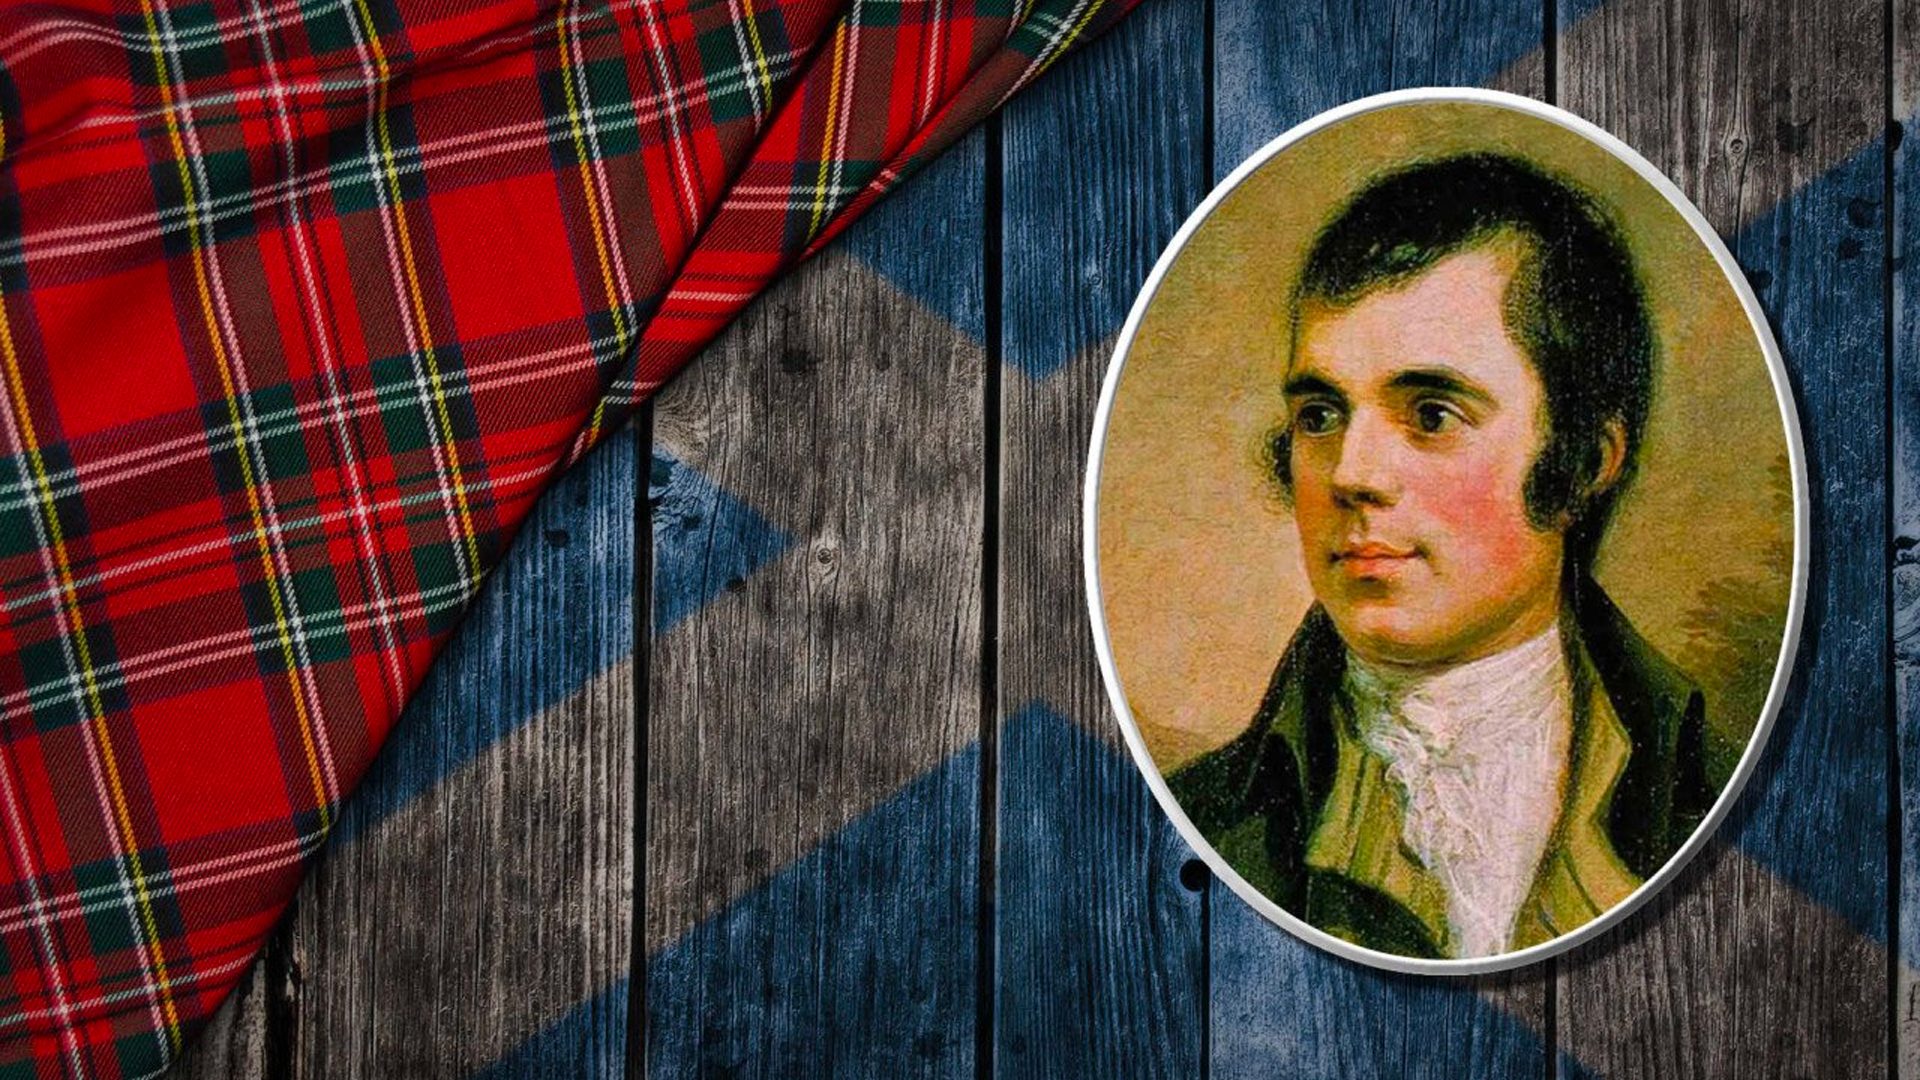 Portrait of the poet Robert Burns atop a Scotland flag